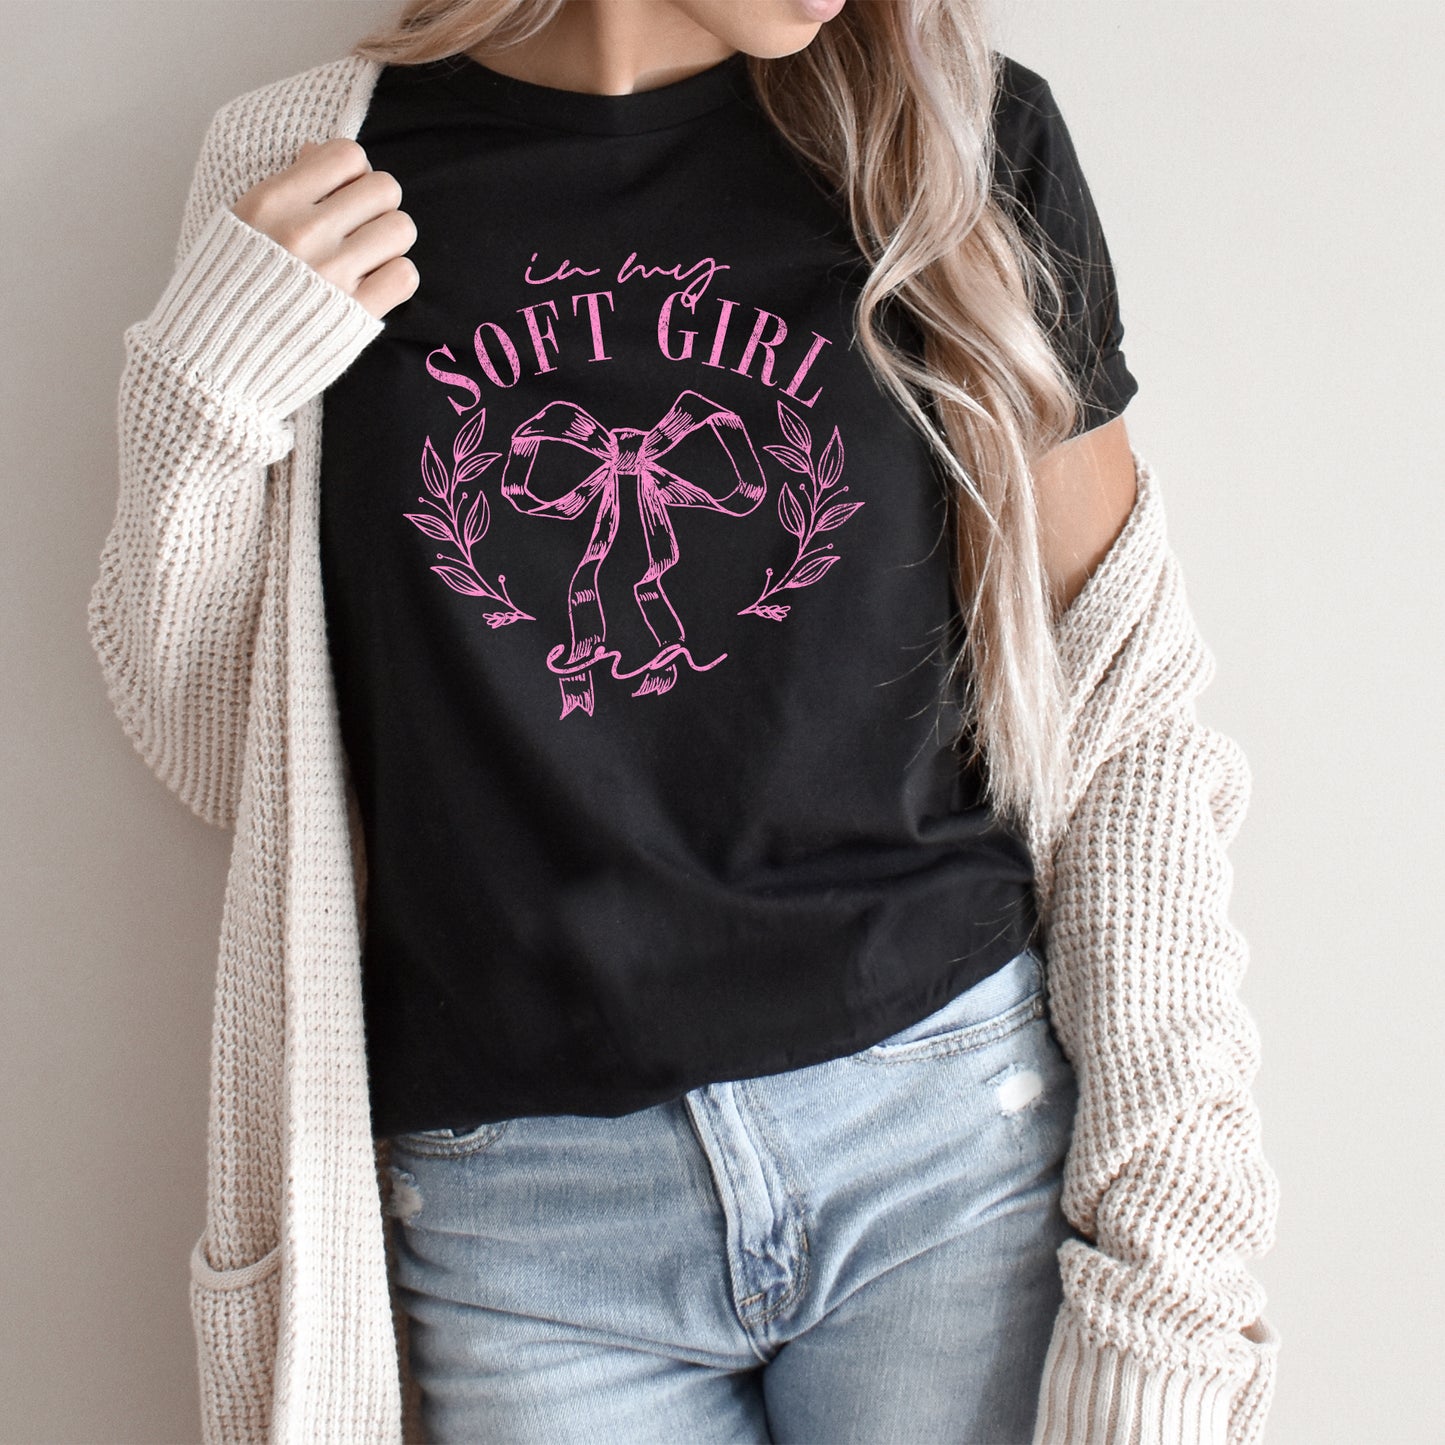 Coquette Soft Girl Era | Short Sleeve Graphic Tee